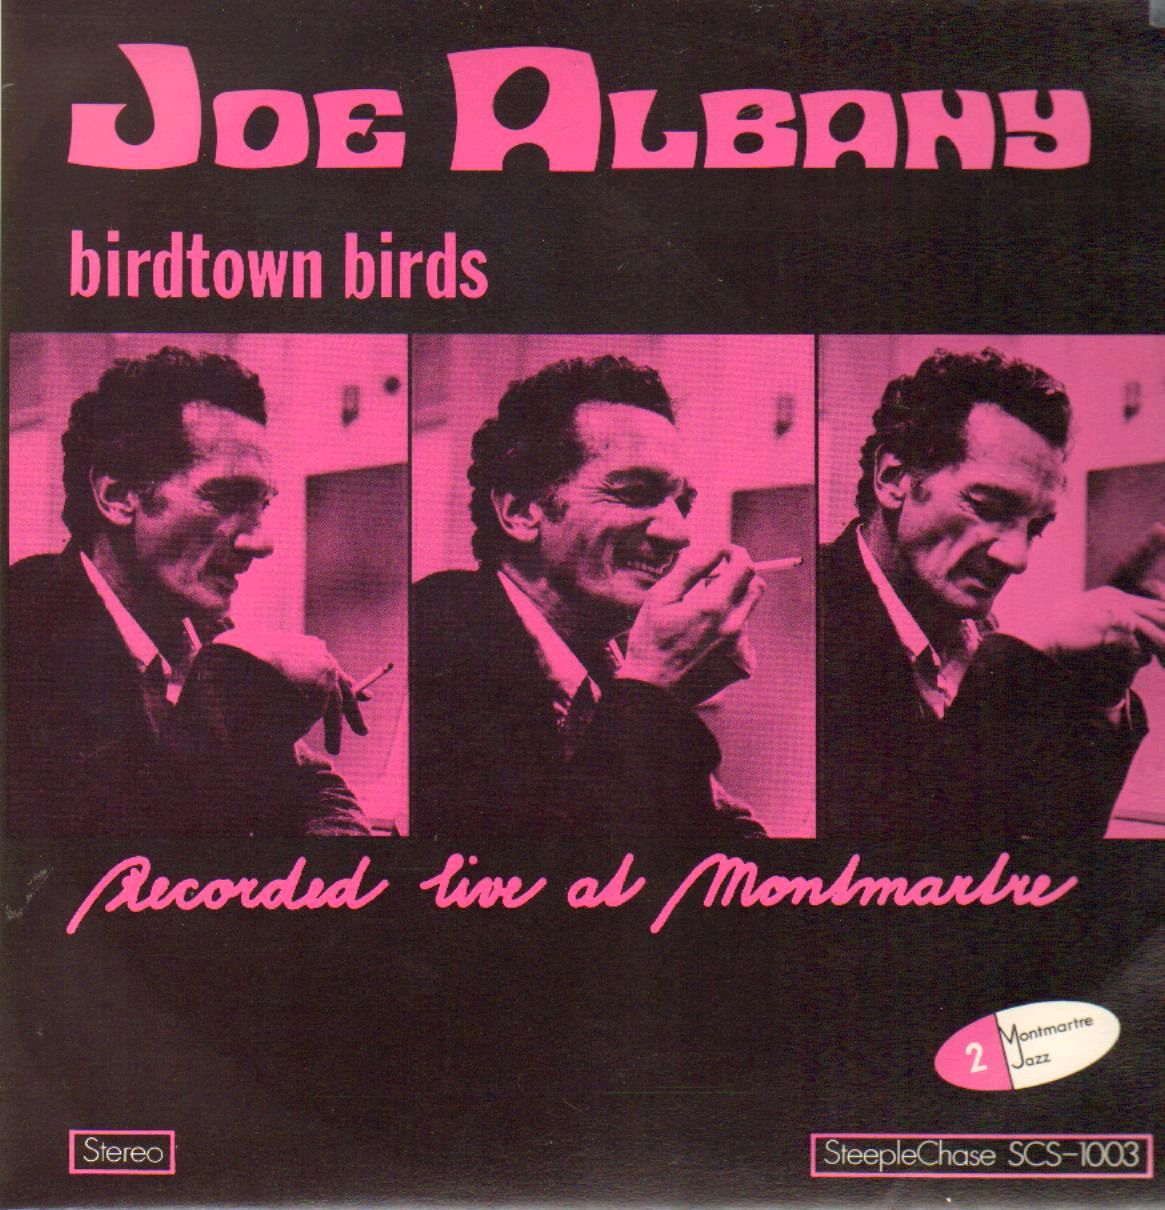 JOE ALBANY - Birdtown Birds - Recorded Live At Montmartre cover 